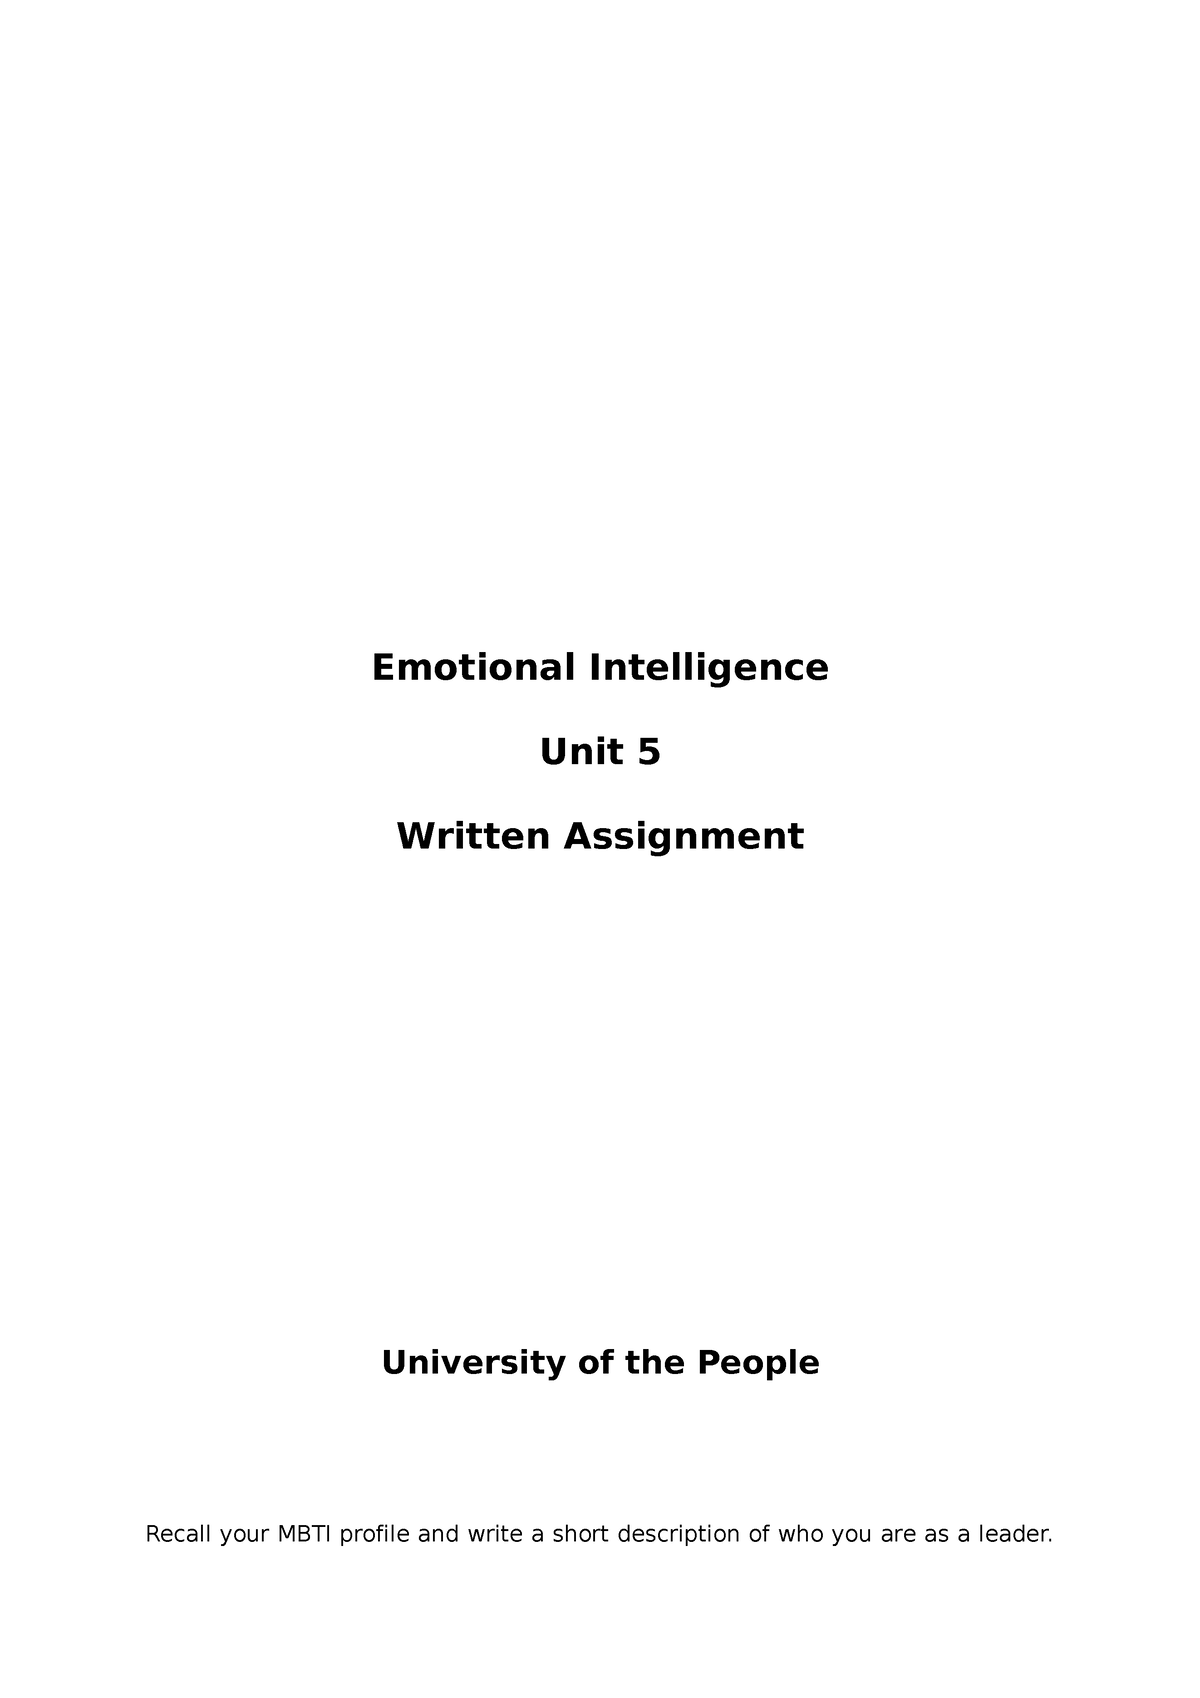 emotional intelligence assignment